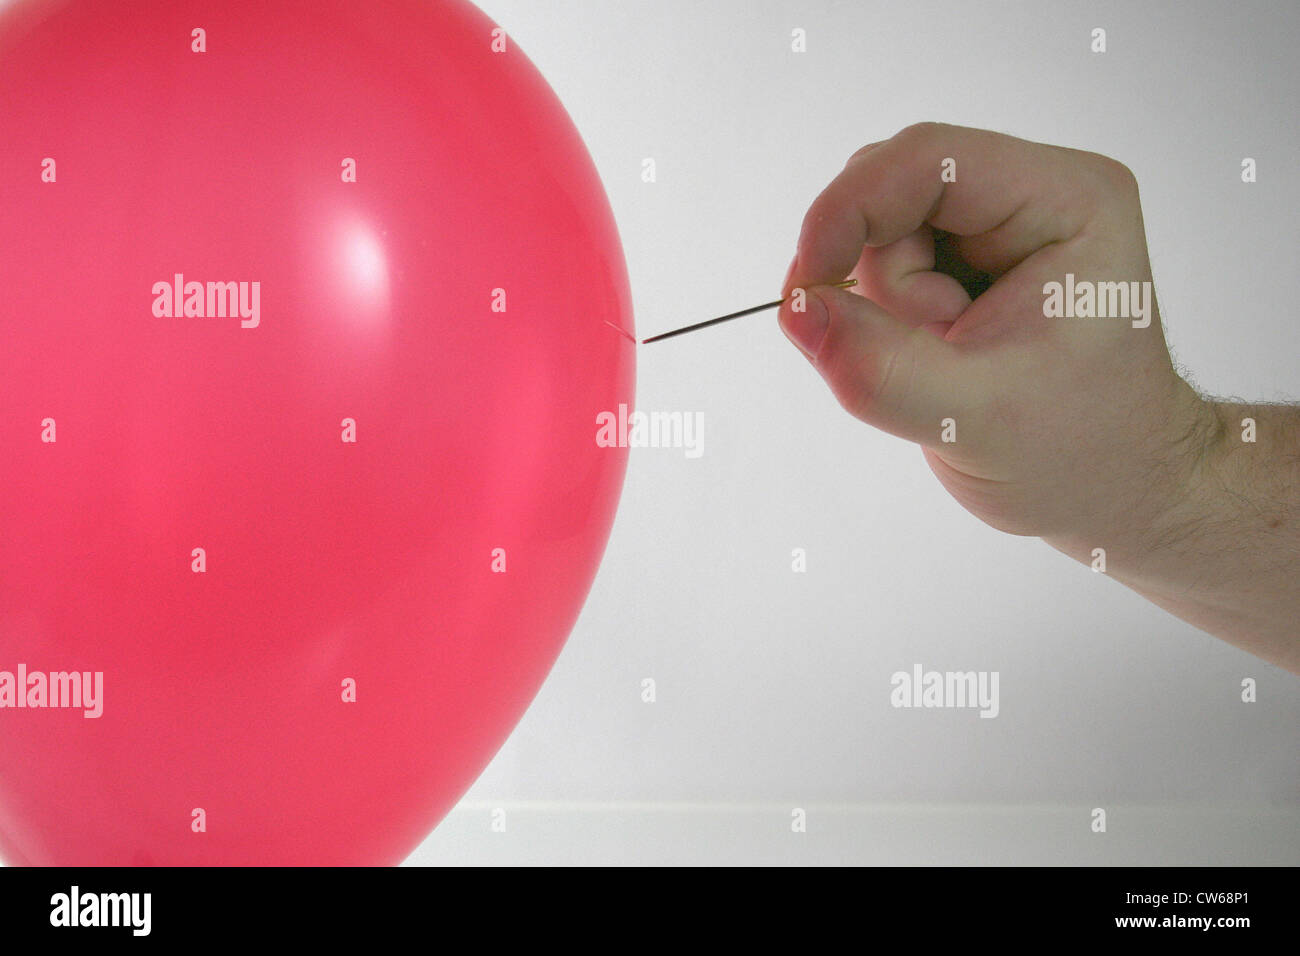 Percer un ballon avec une aiguille Photo Stock - Alamy